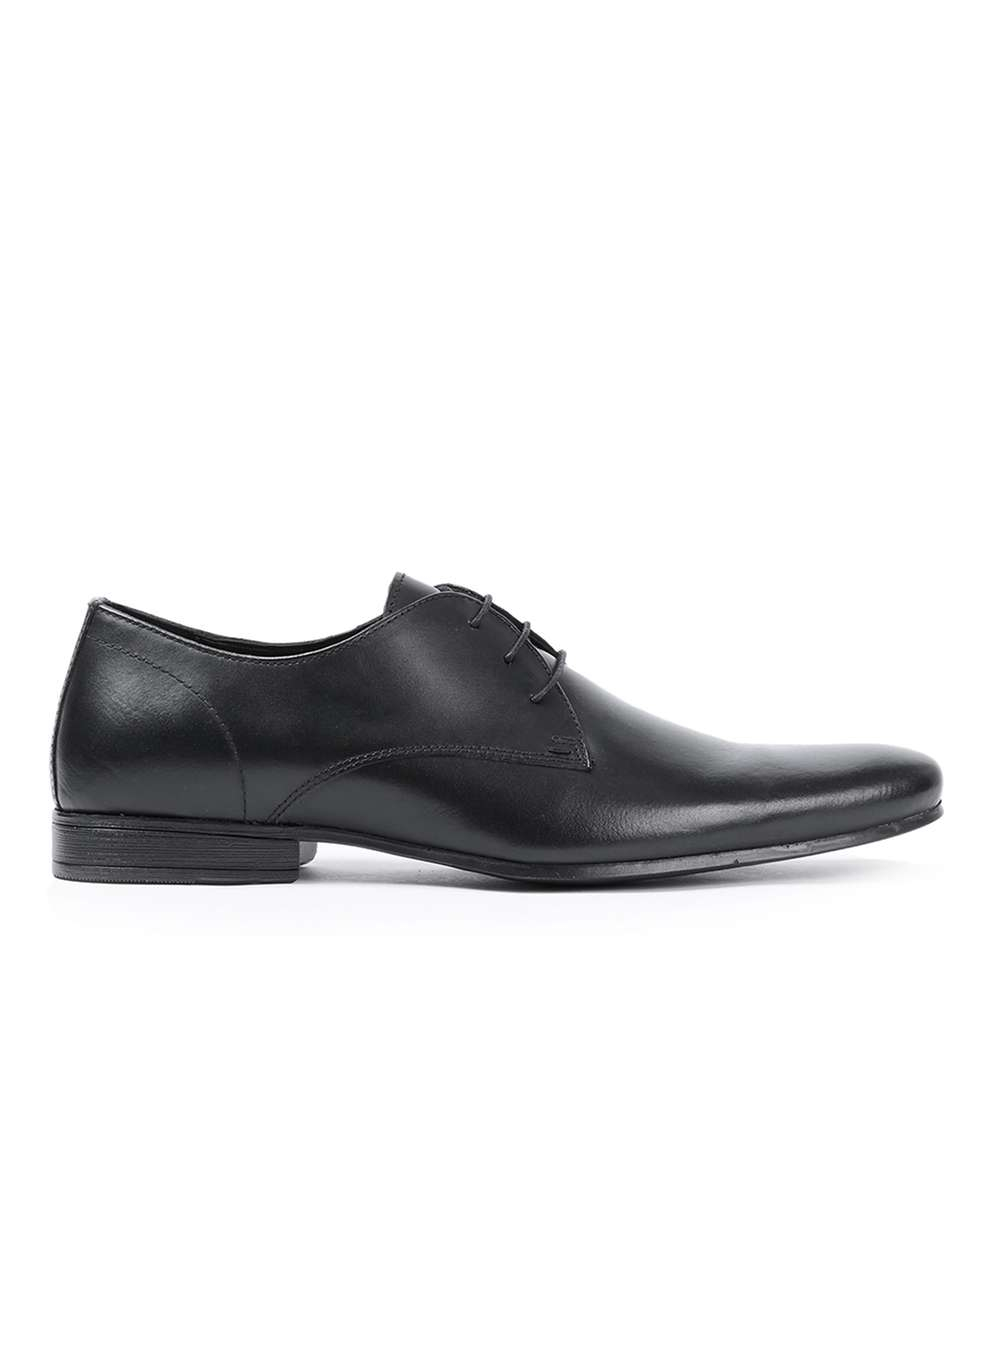 Topman Black Leather Derby Shoes in Black for Men | Lyst